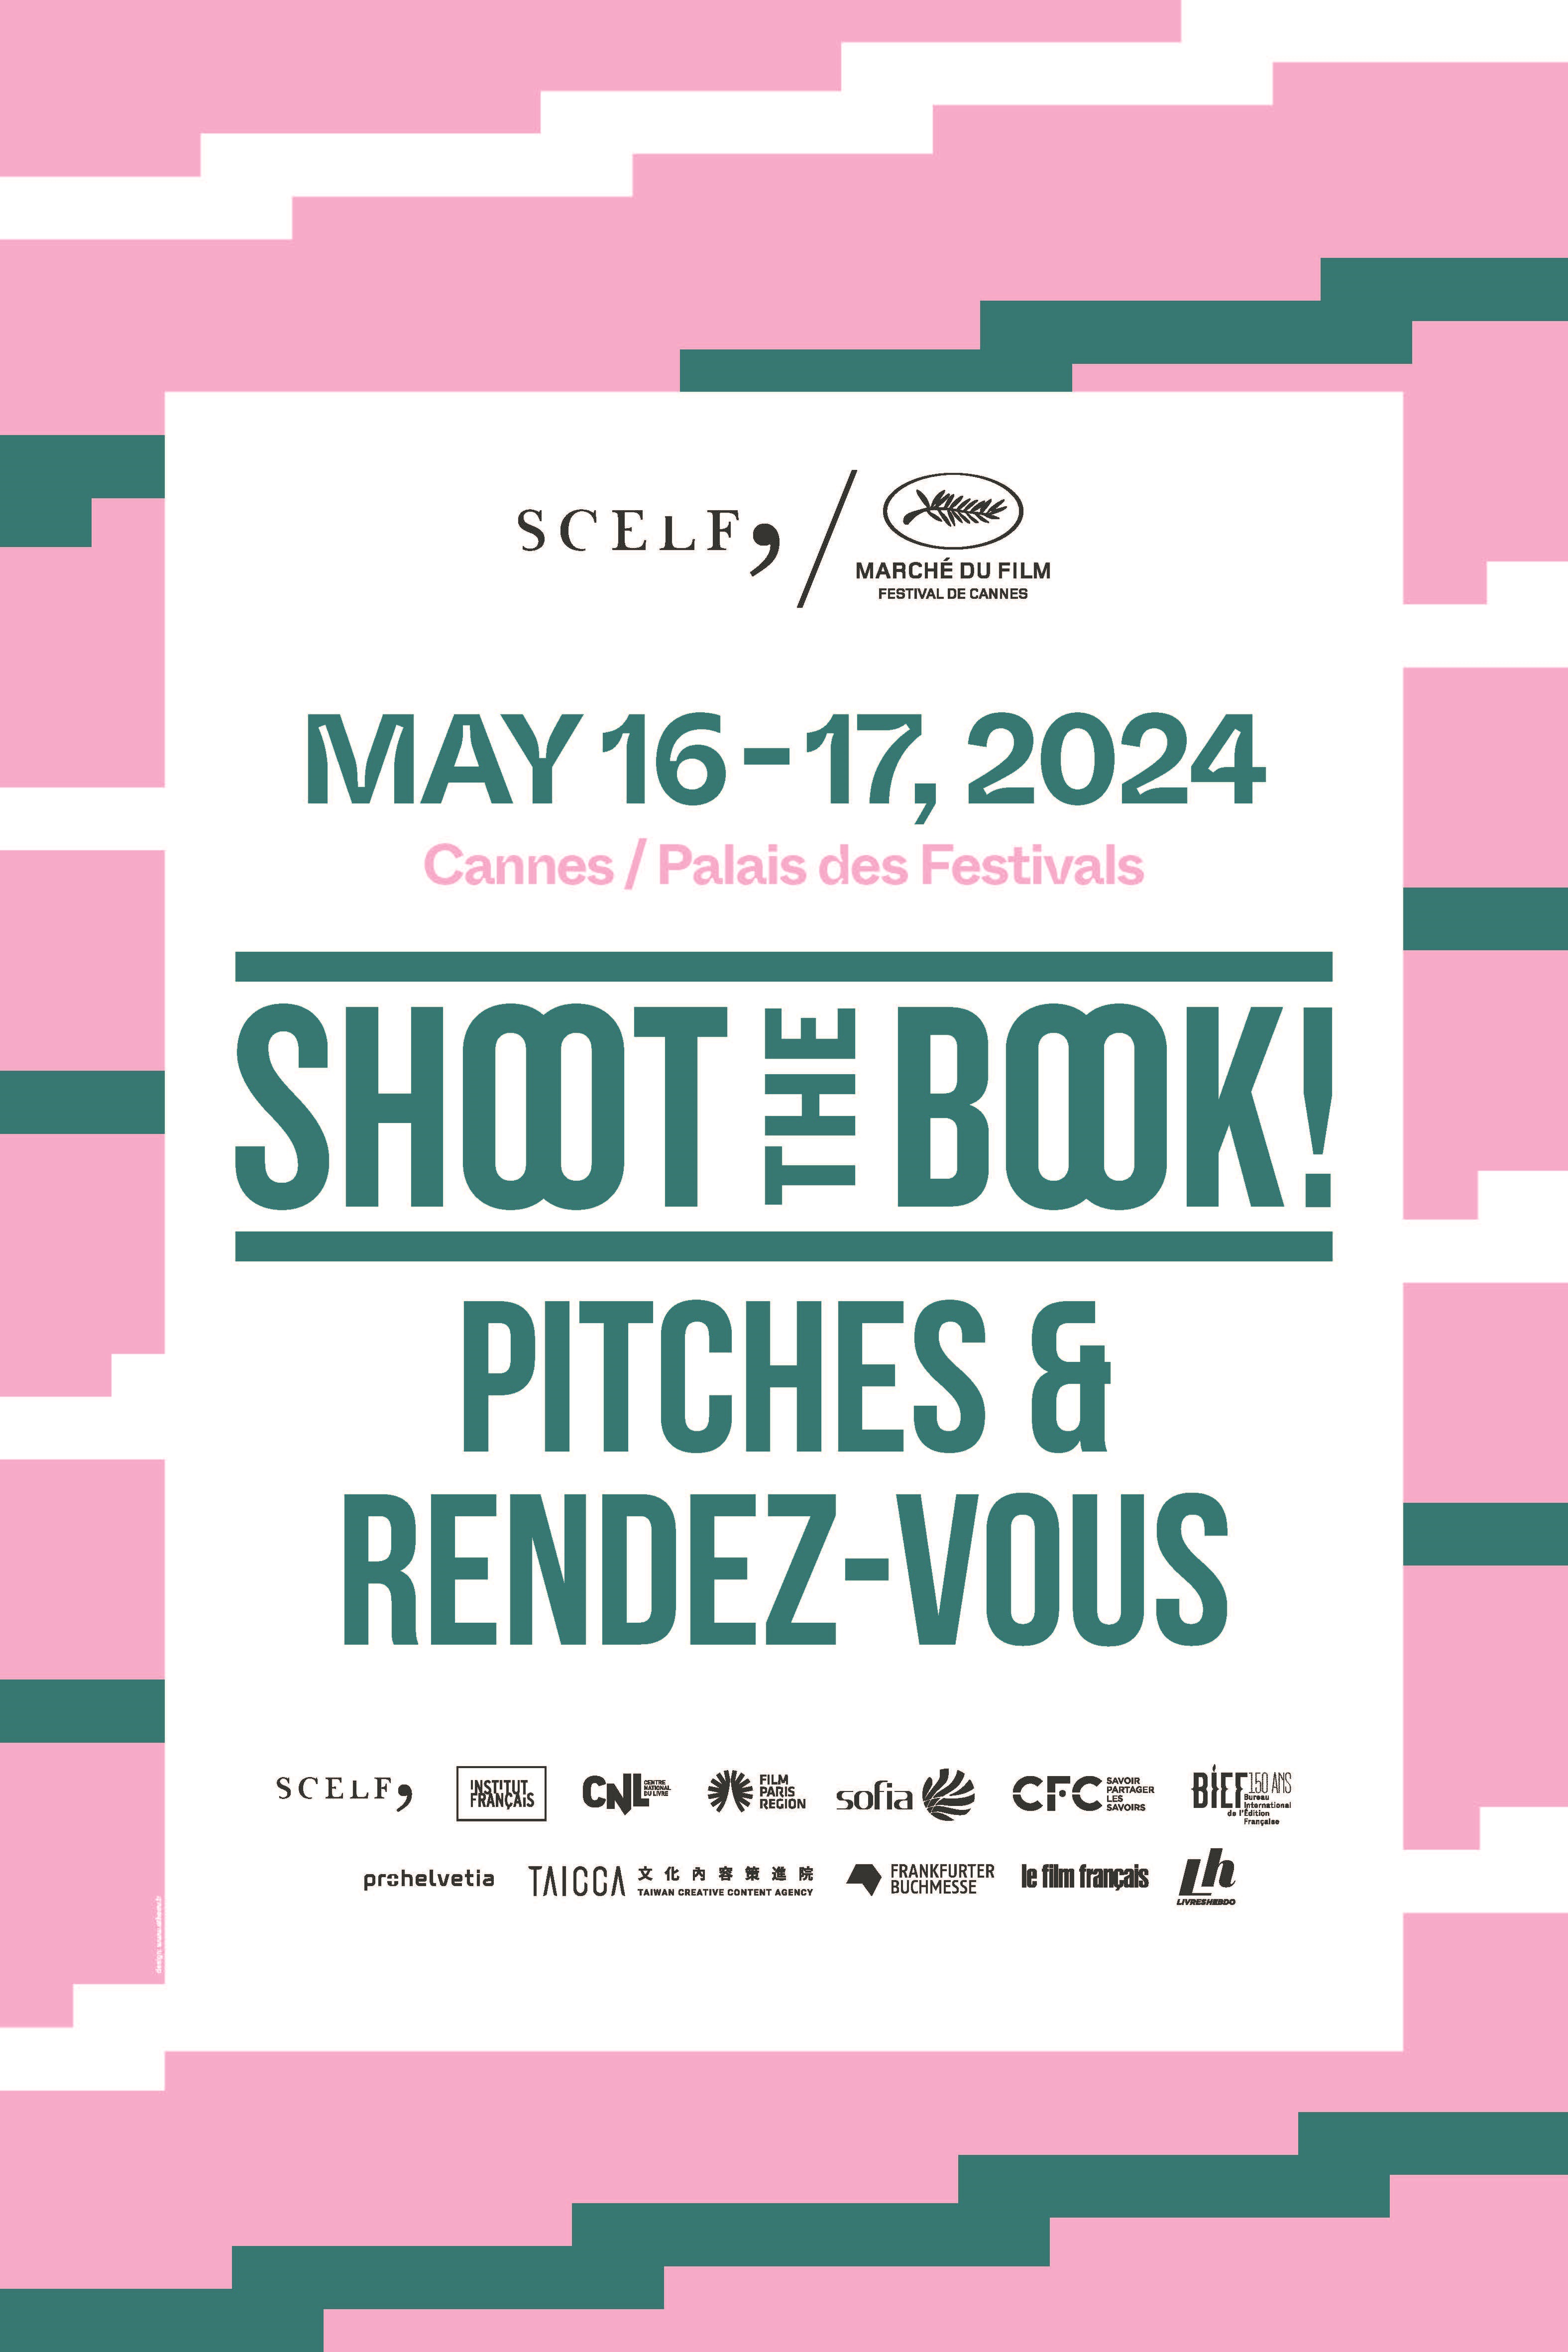 Shoot the book! Cannes Rendez-vous